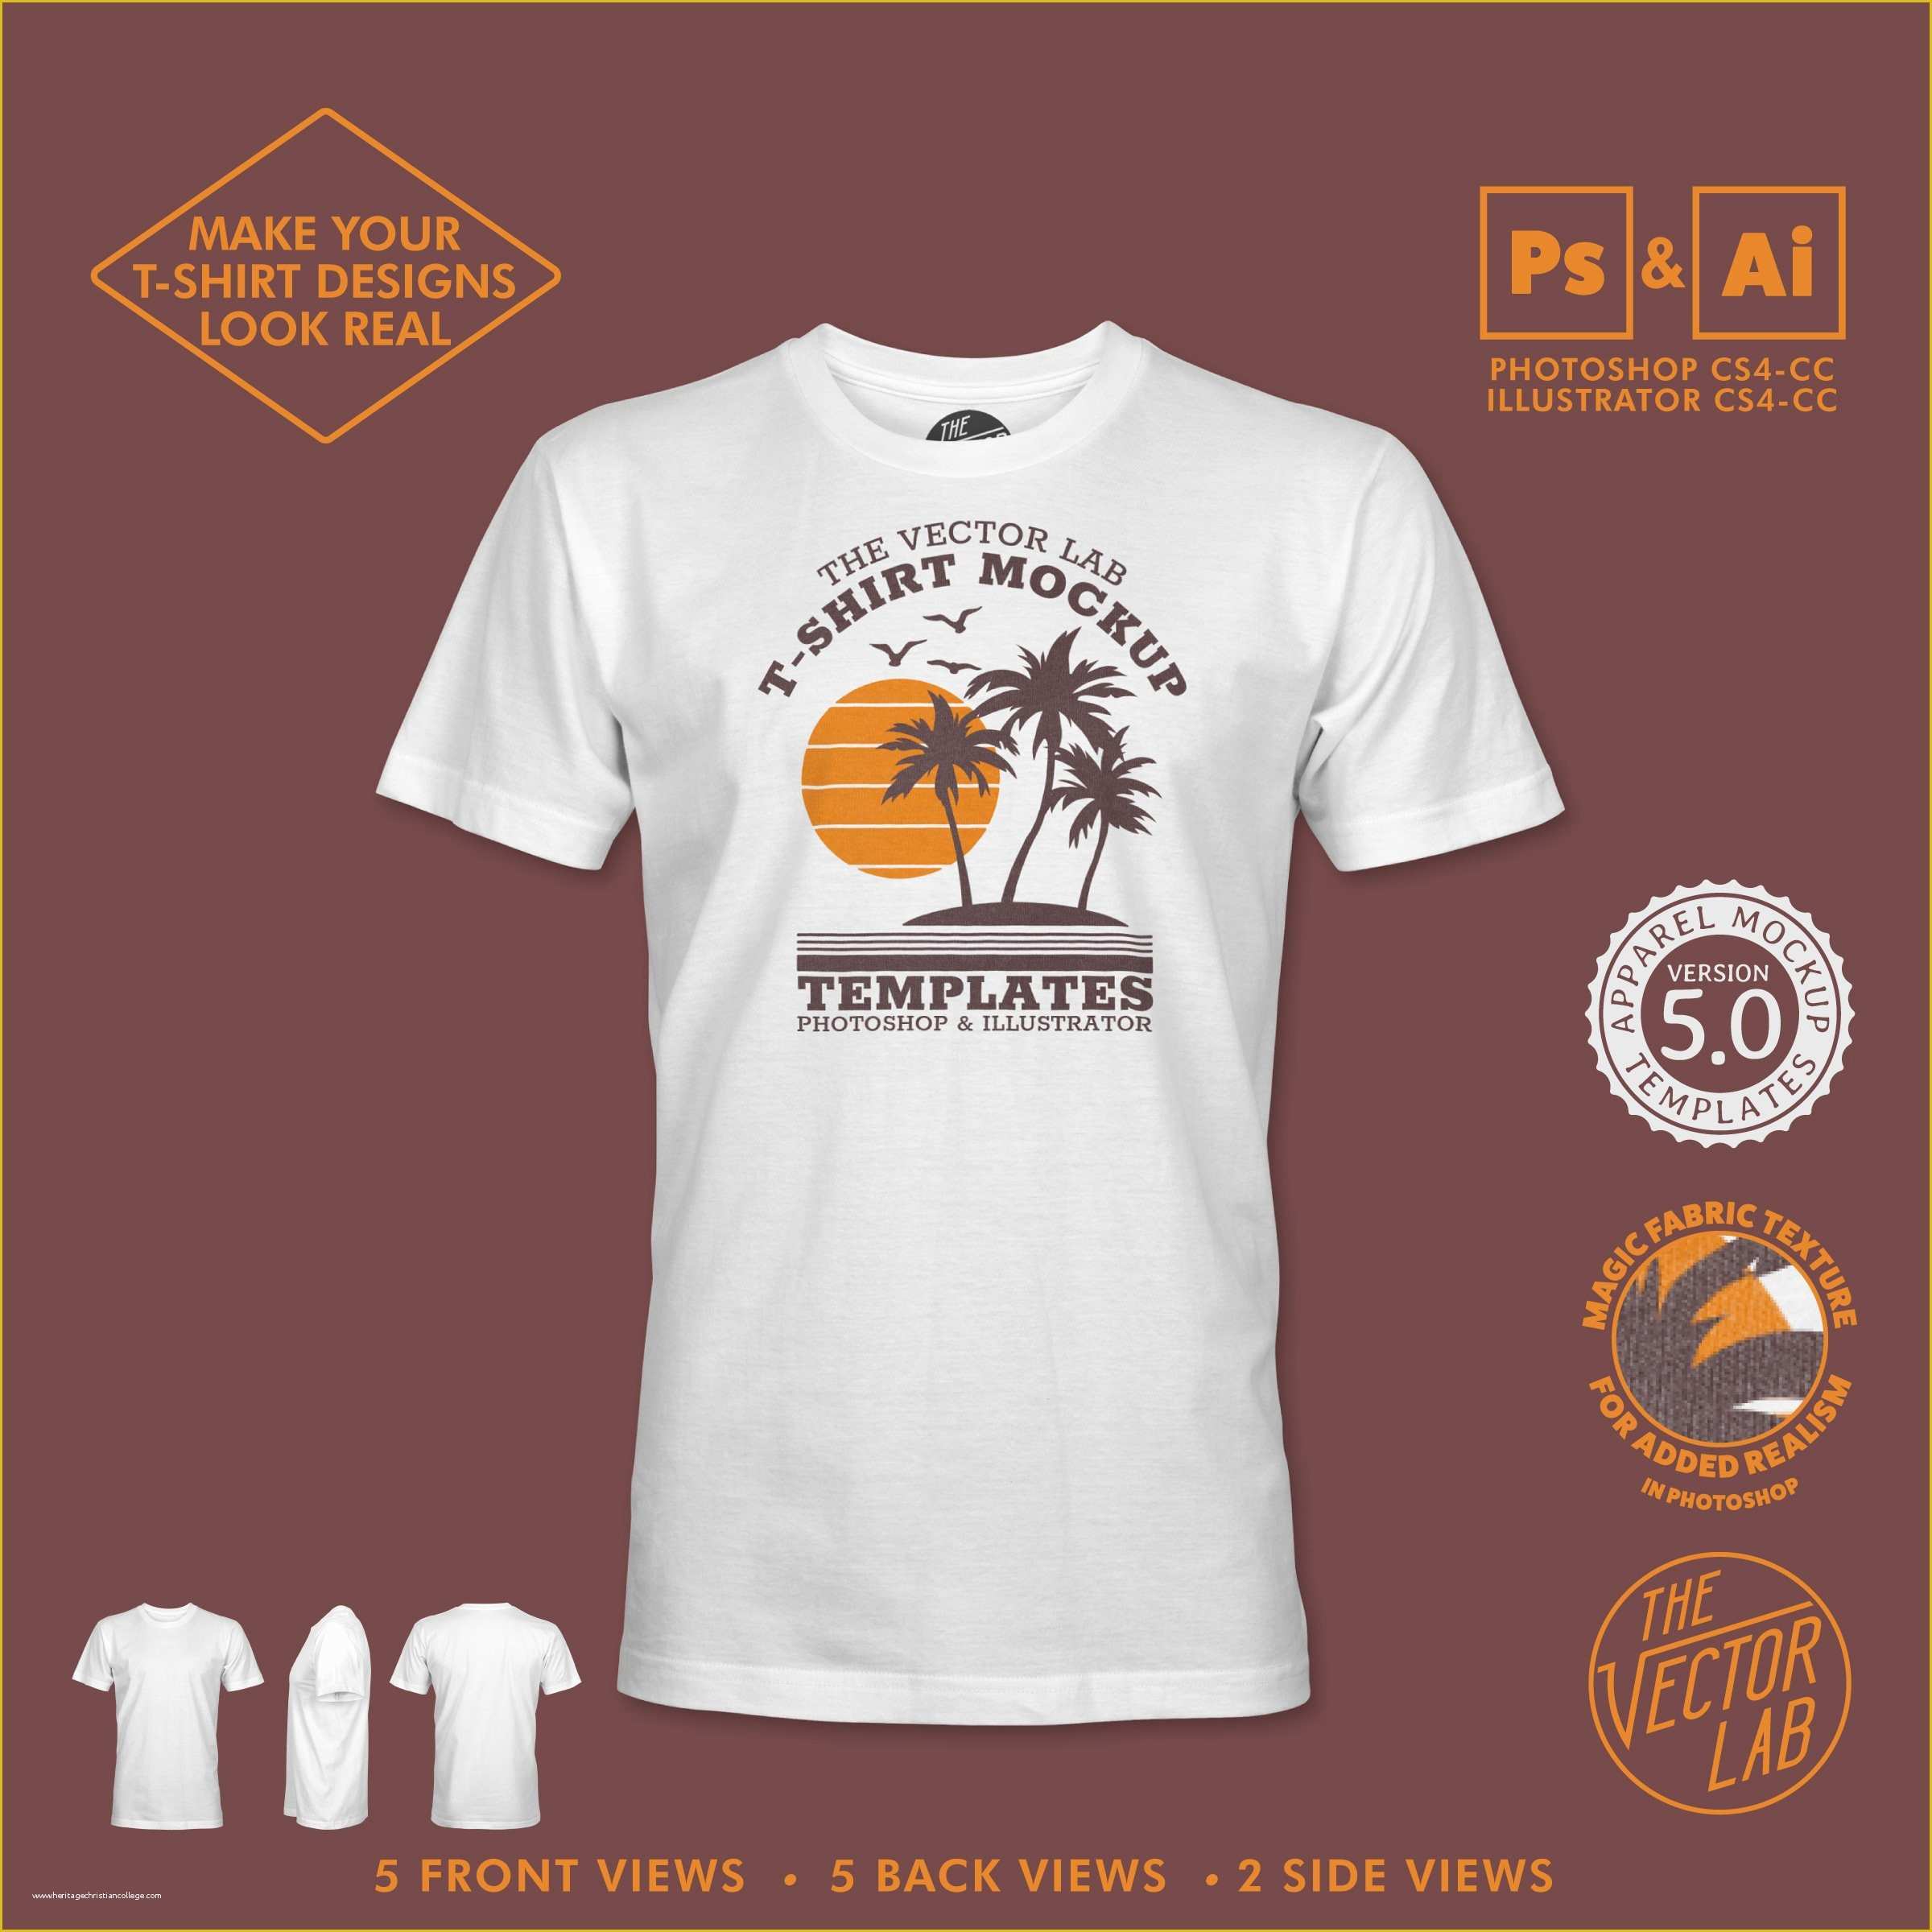 Free Shirt Templates Of Men S T Shirt Mockup Templates Version 5 0 thevectorlab